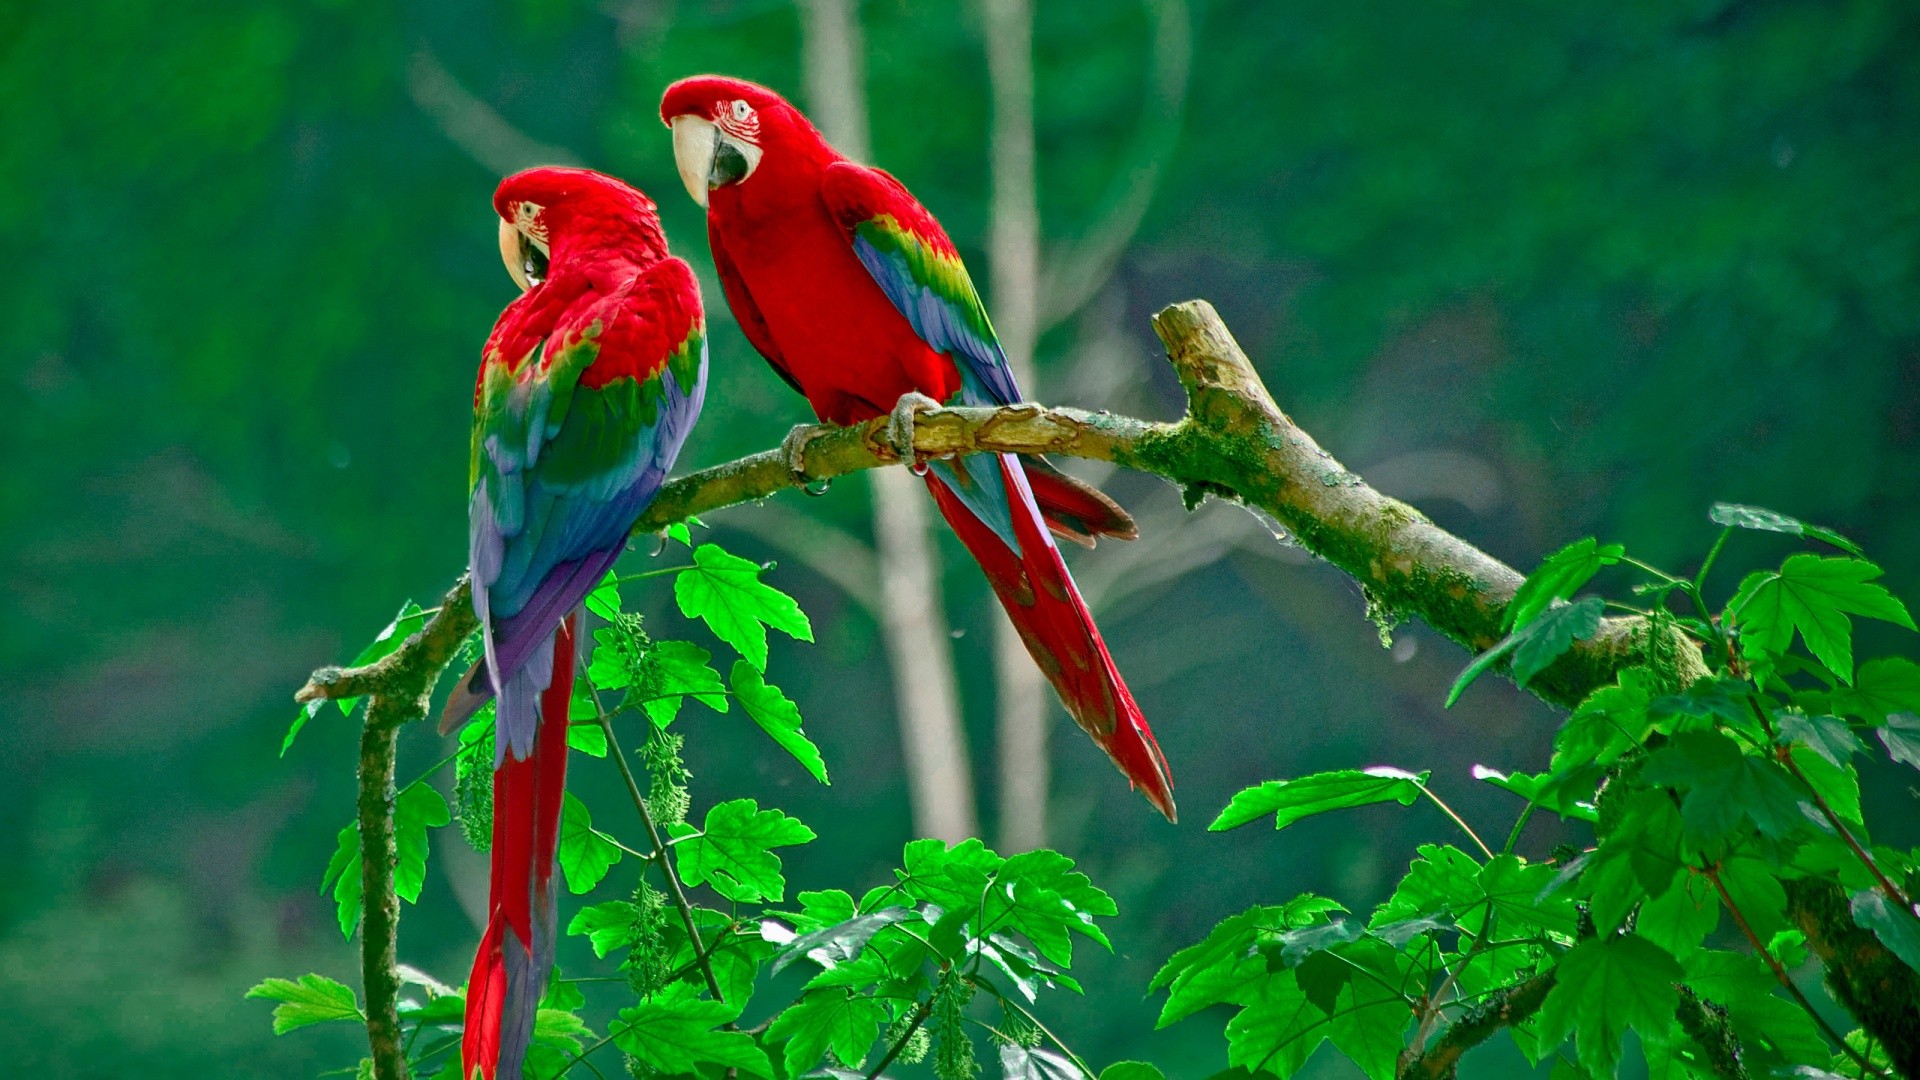 General 1920x1080 nature animals wildlife macaws parrot birds